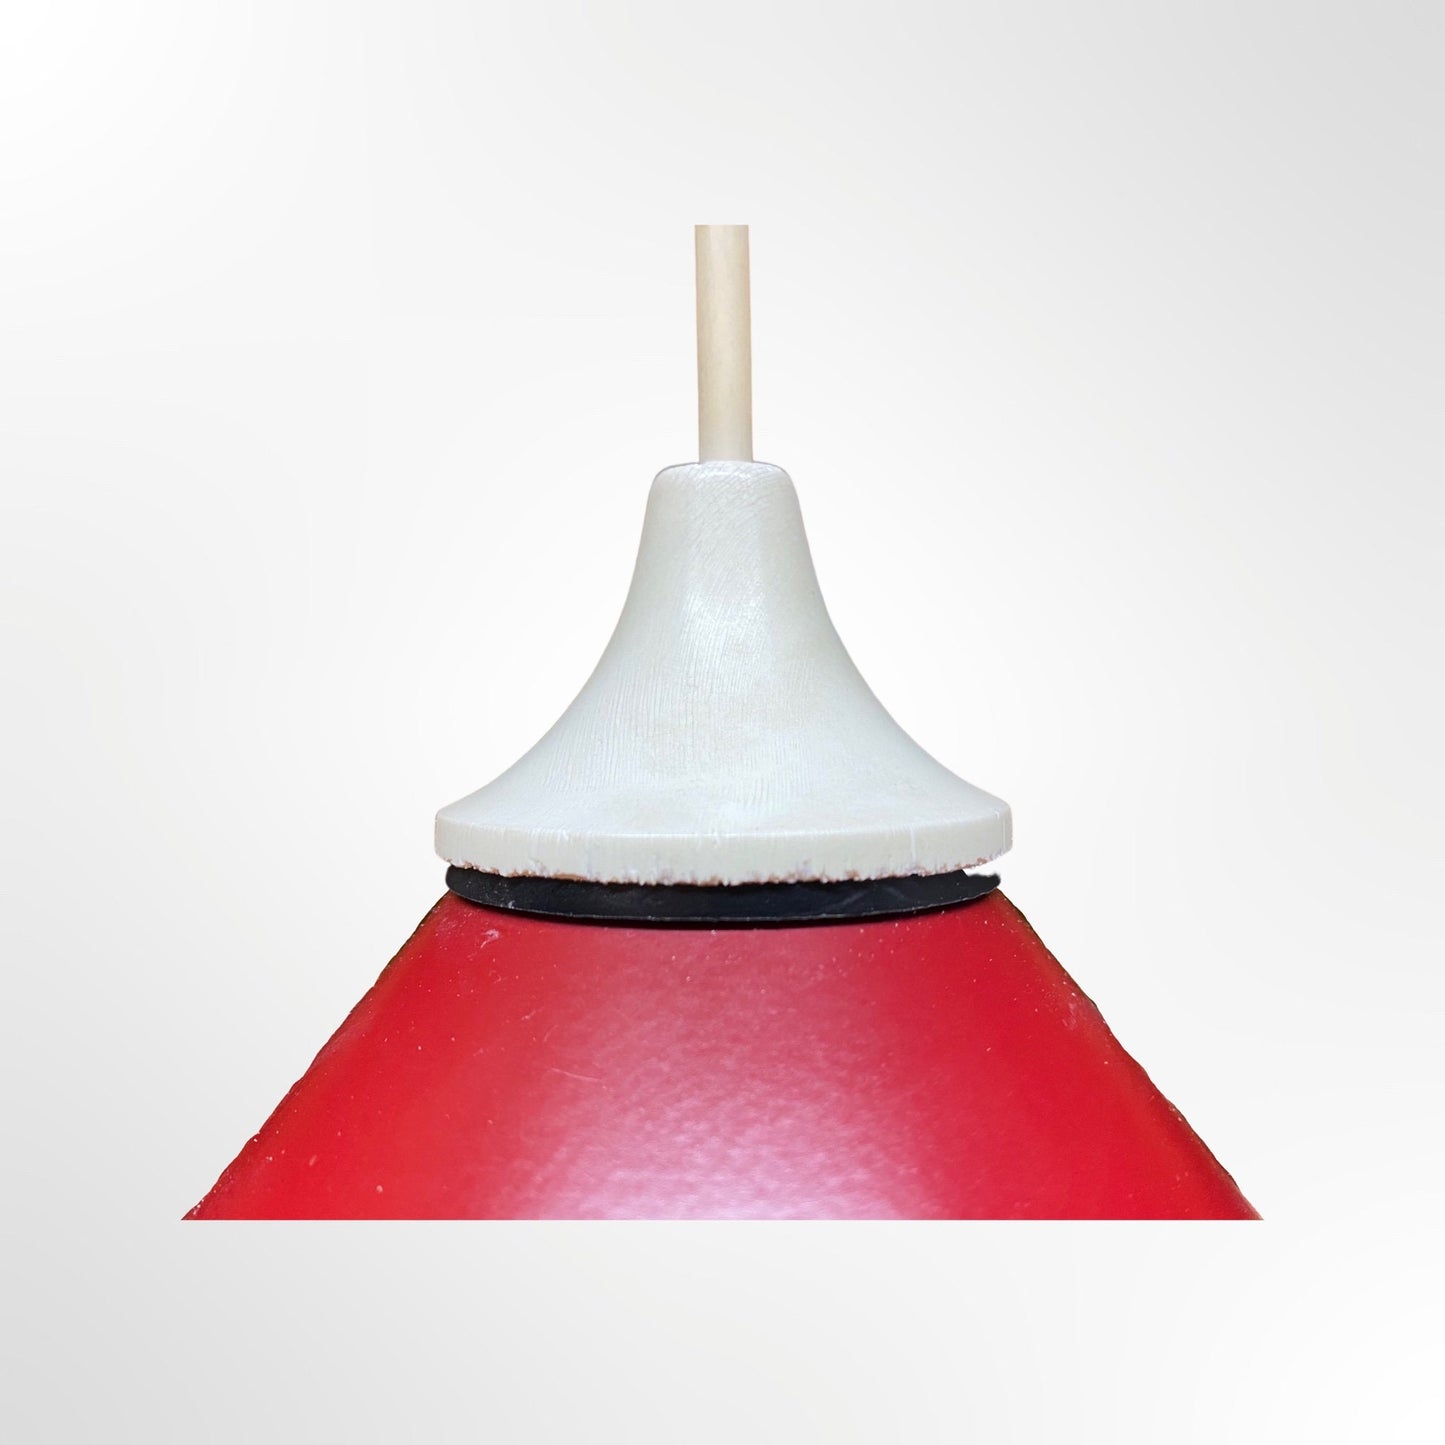 1960s Red Scandinavian Pendant Light - Vintage Hanging Lamp From Denmark -  Scandinavian Modern Vintage Lighting | Width: 9.8 inch / 25 cm